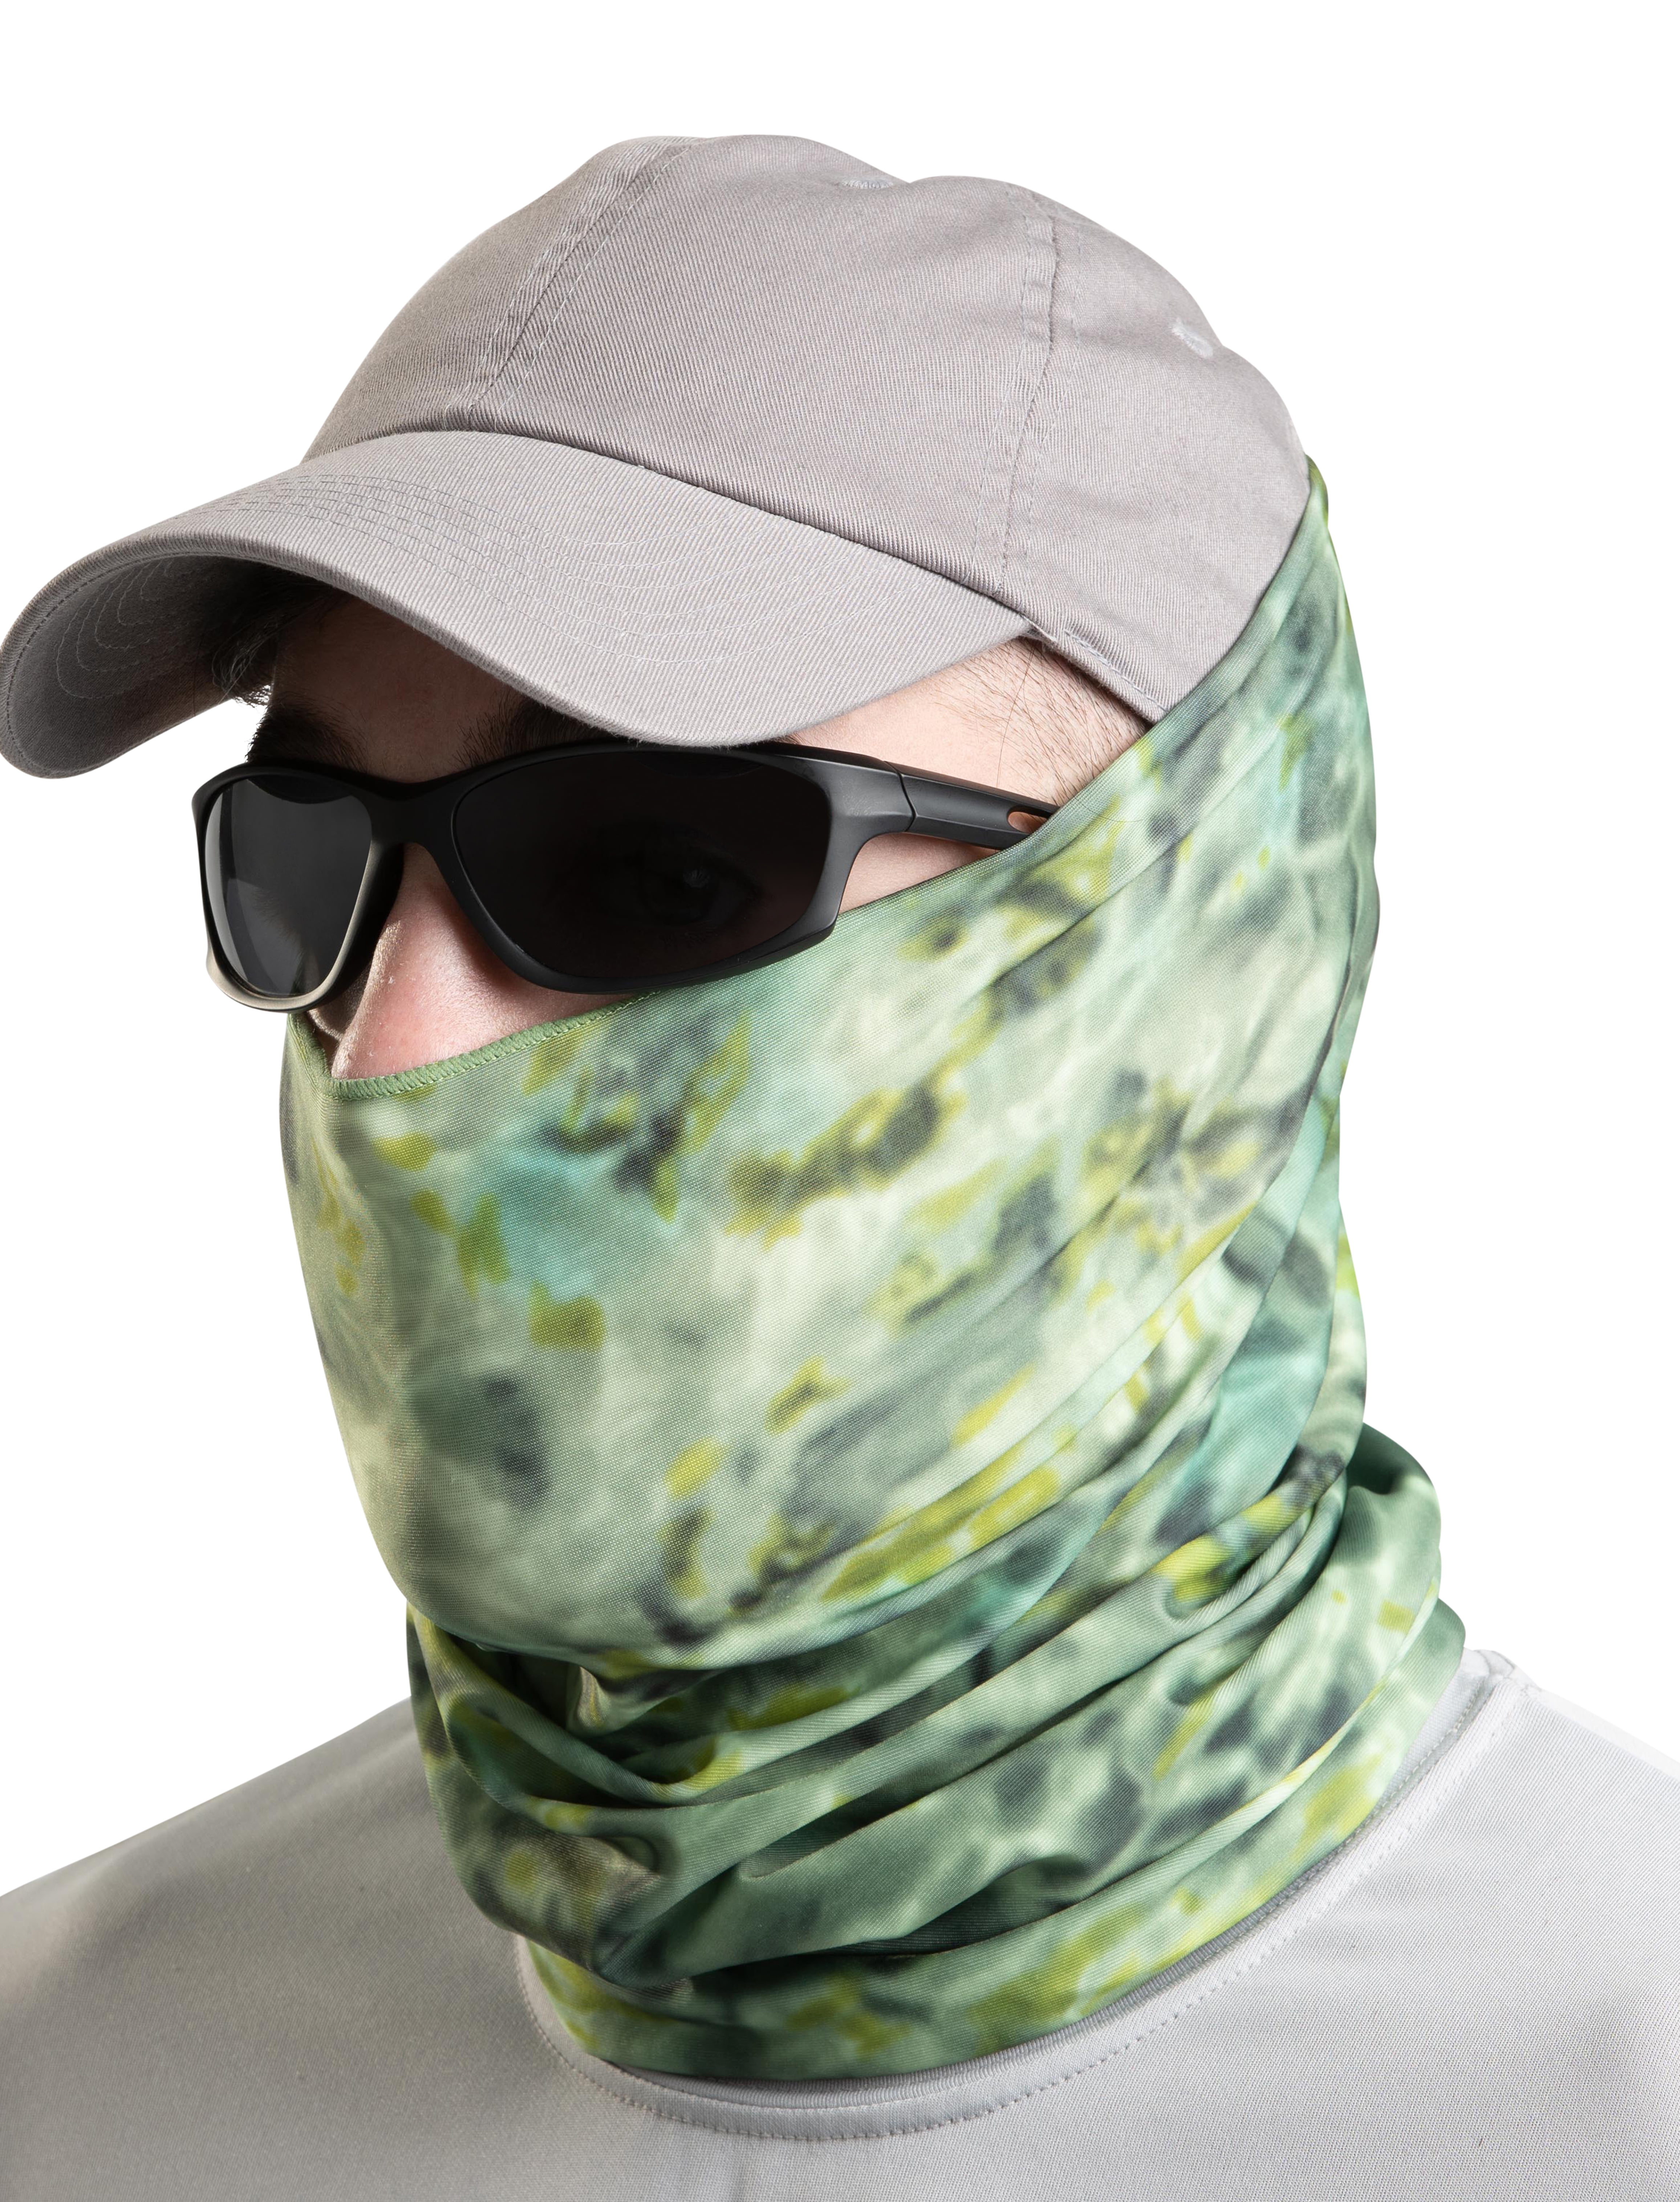 Details about   Bandana Neck Gaiter Balaclava UV Sun Protection Face Mask Cycing Headwear US 